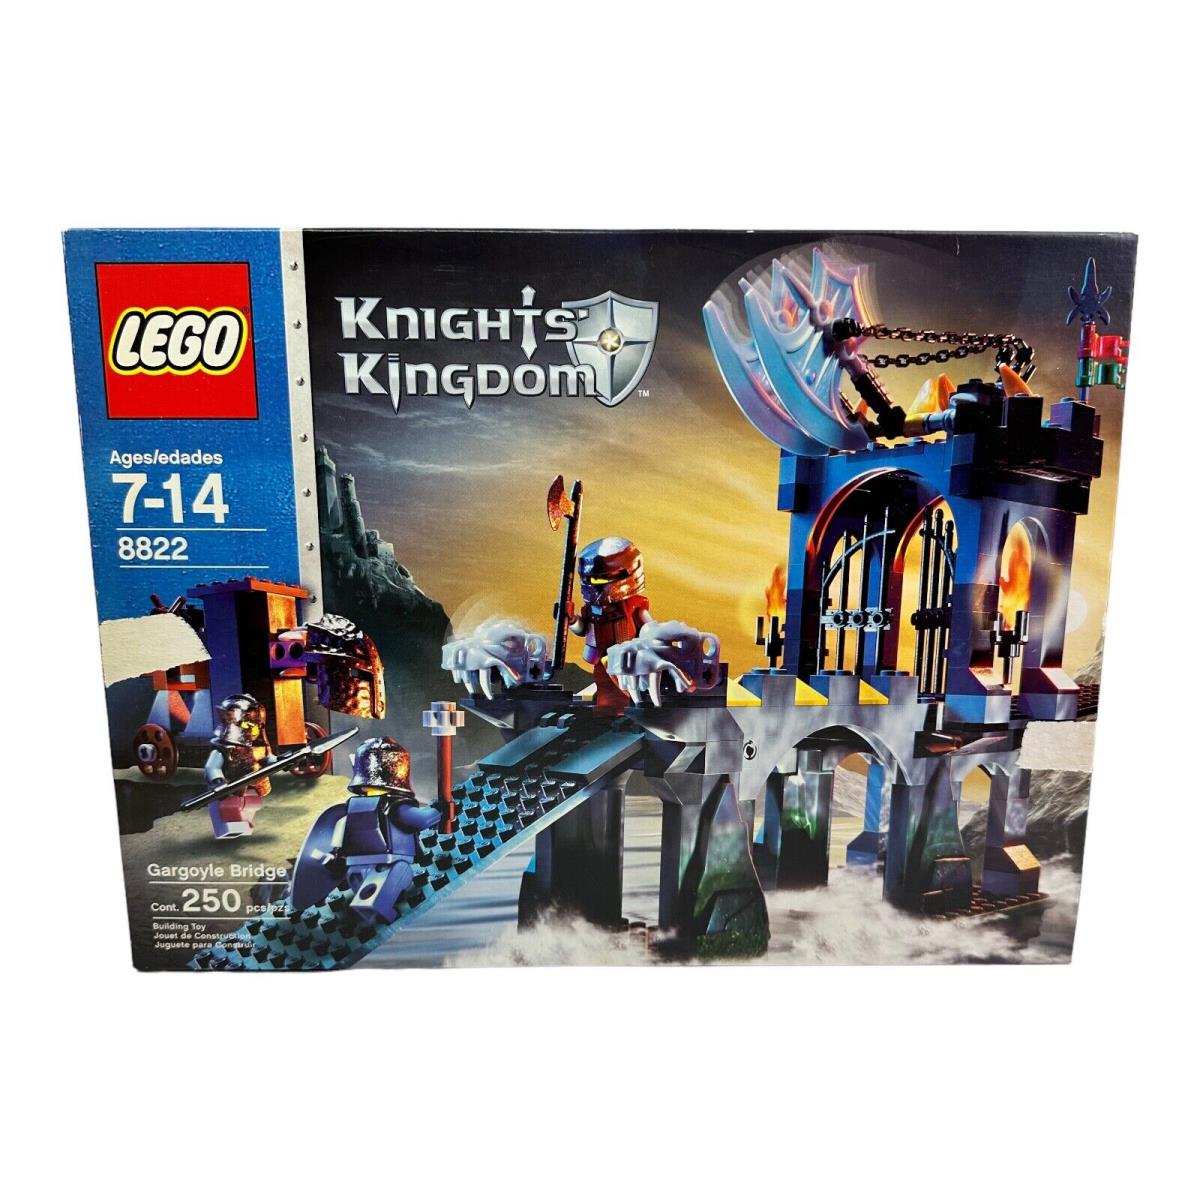 Lego 8822 Castle Knights Kingdom Gargoyle Bridge Retired Set